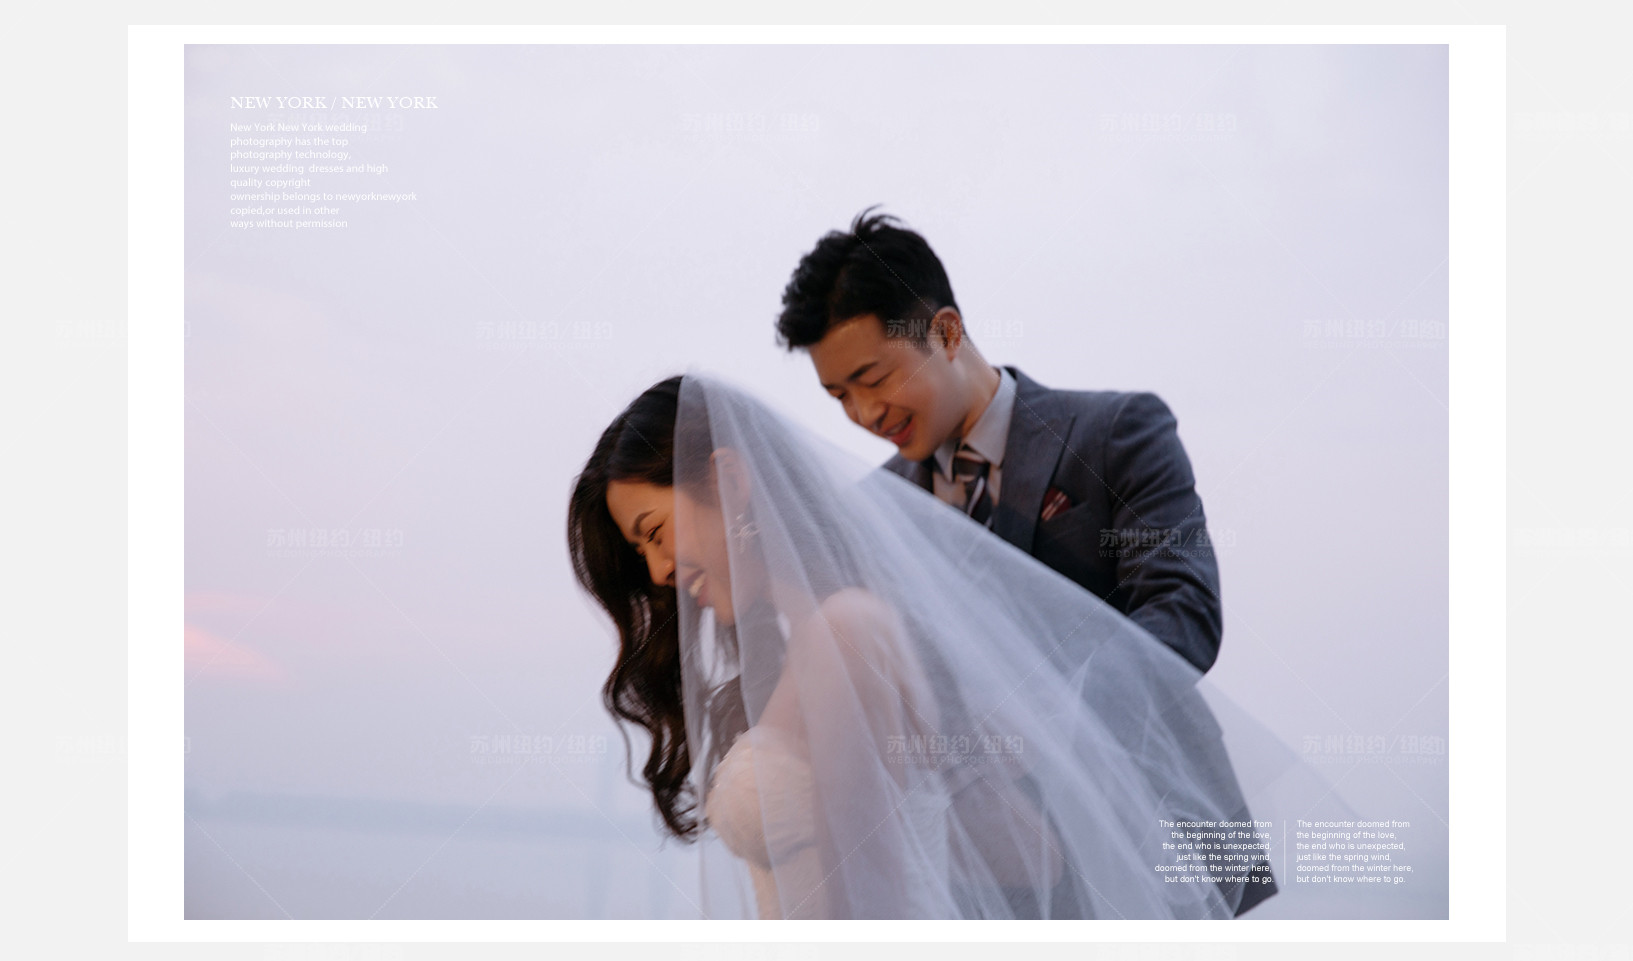 Mr.丁 & Ms.胡（纽约纽约最新客照）婚纱摄影照